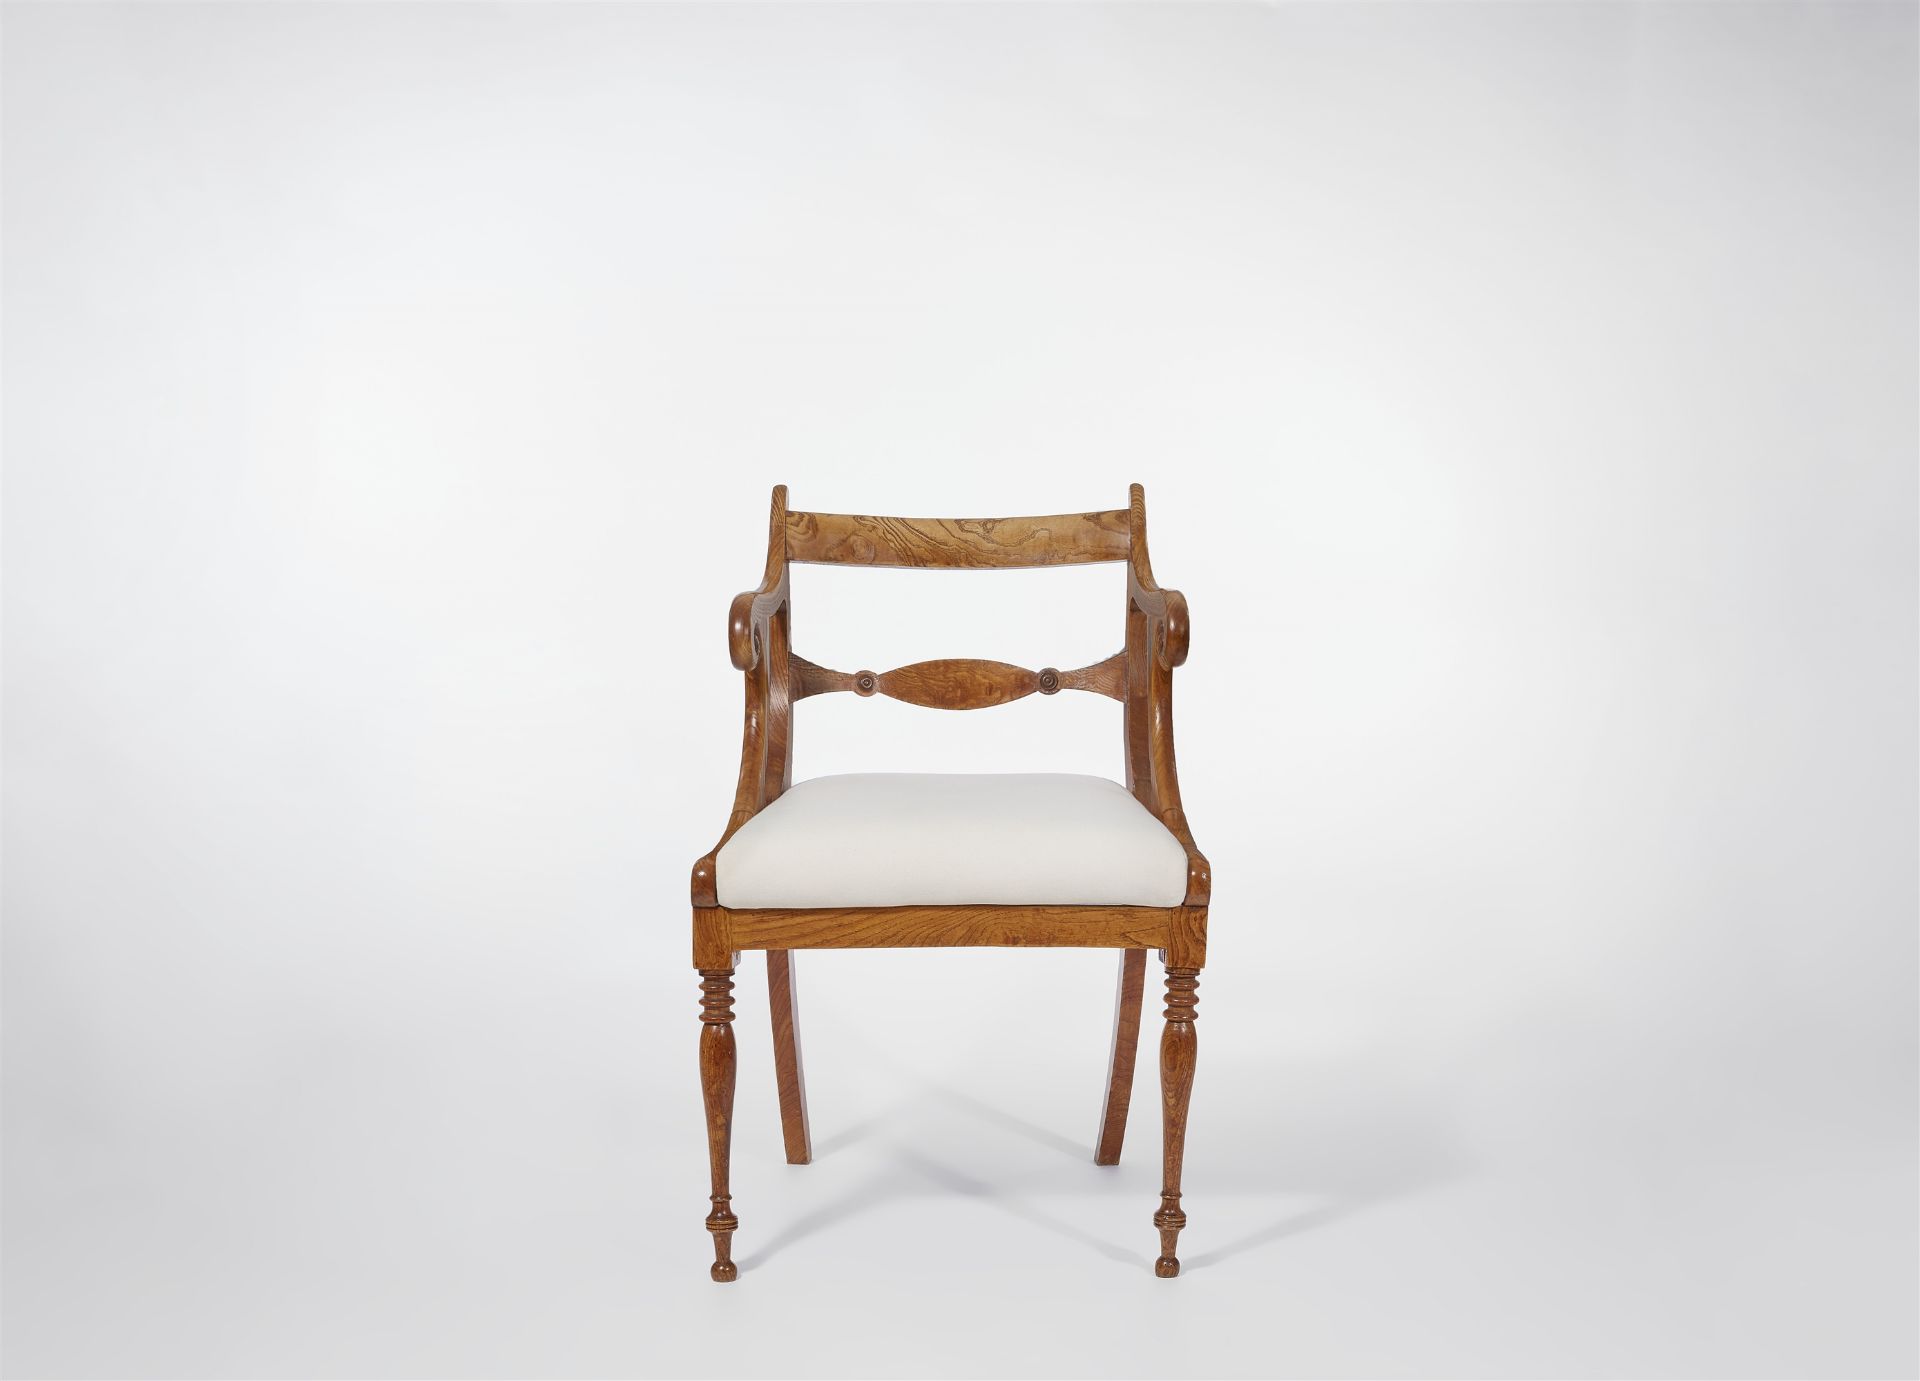 An armchair after a design by Karl Friedrich Schinkel - Image 6 of 6